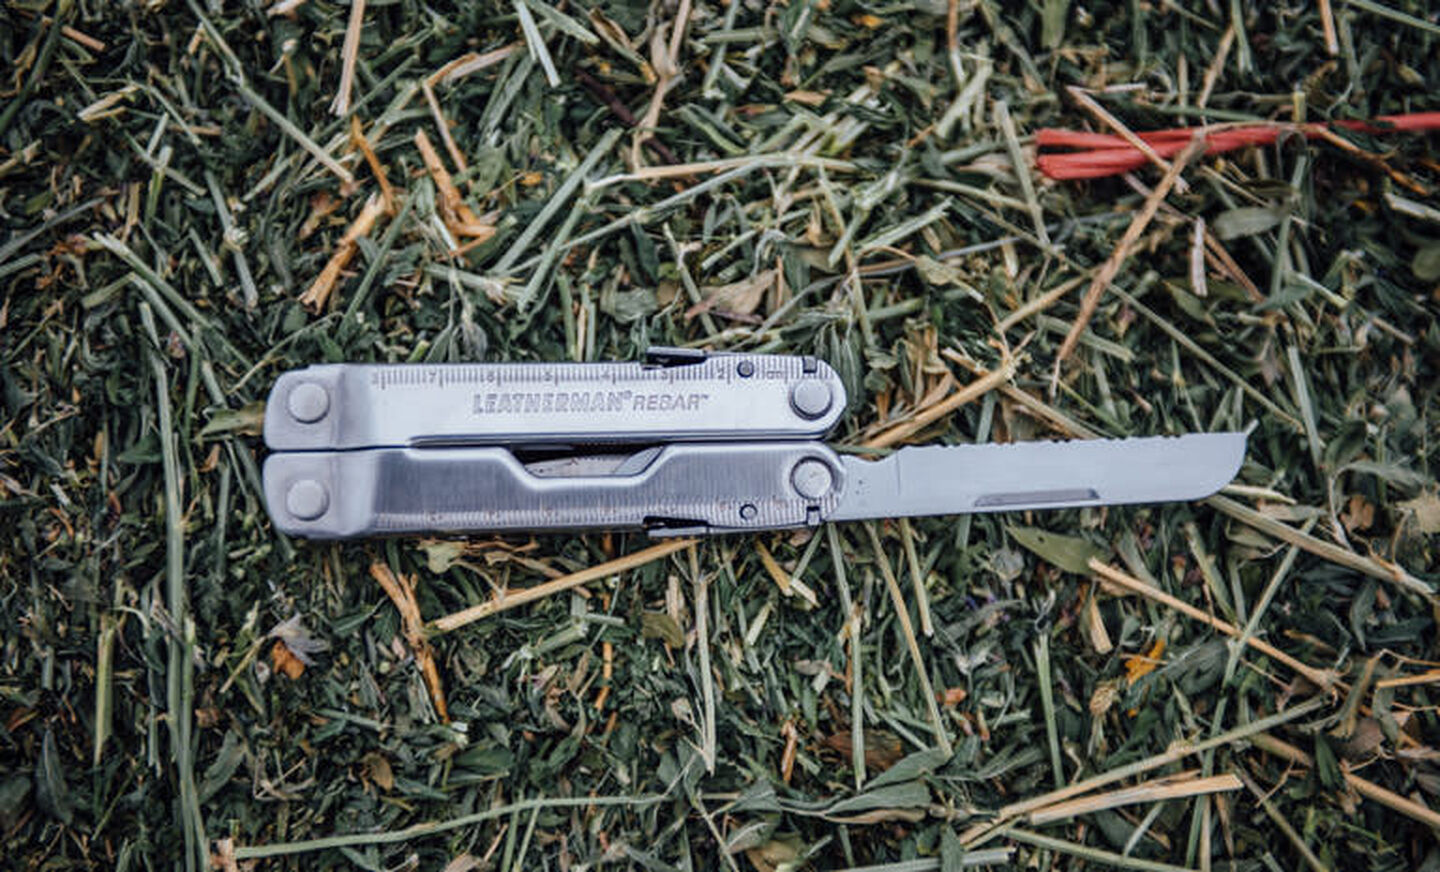 Leatherman stainless steel heritage rebar multi-tool on grass, knife blade open